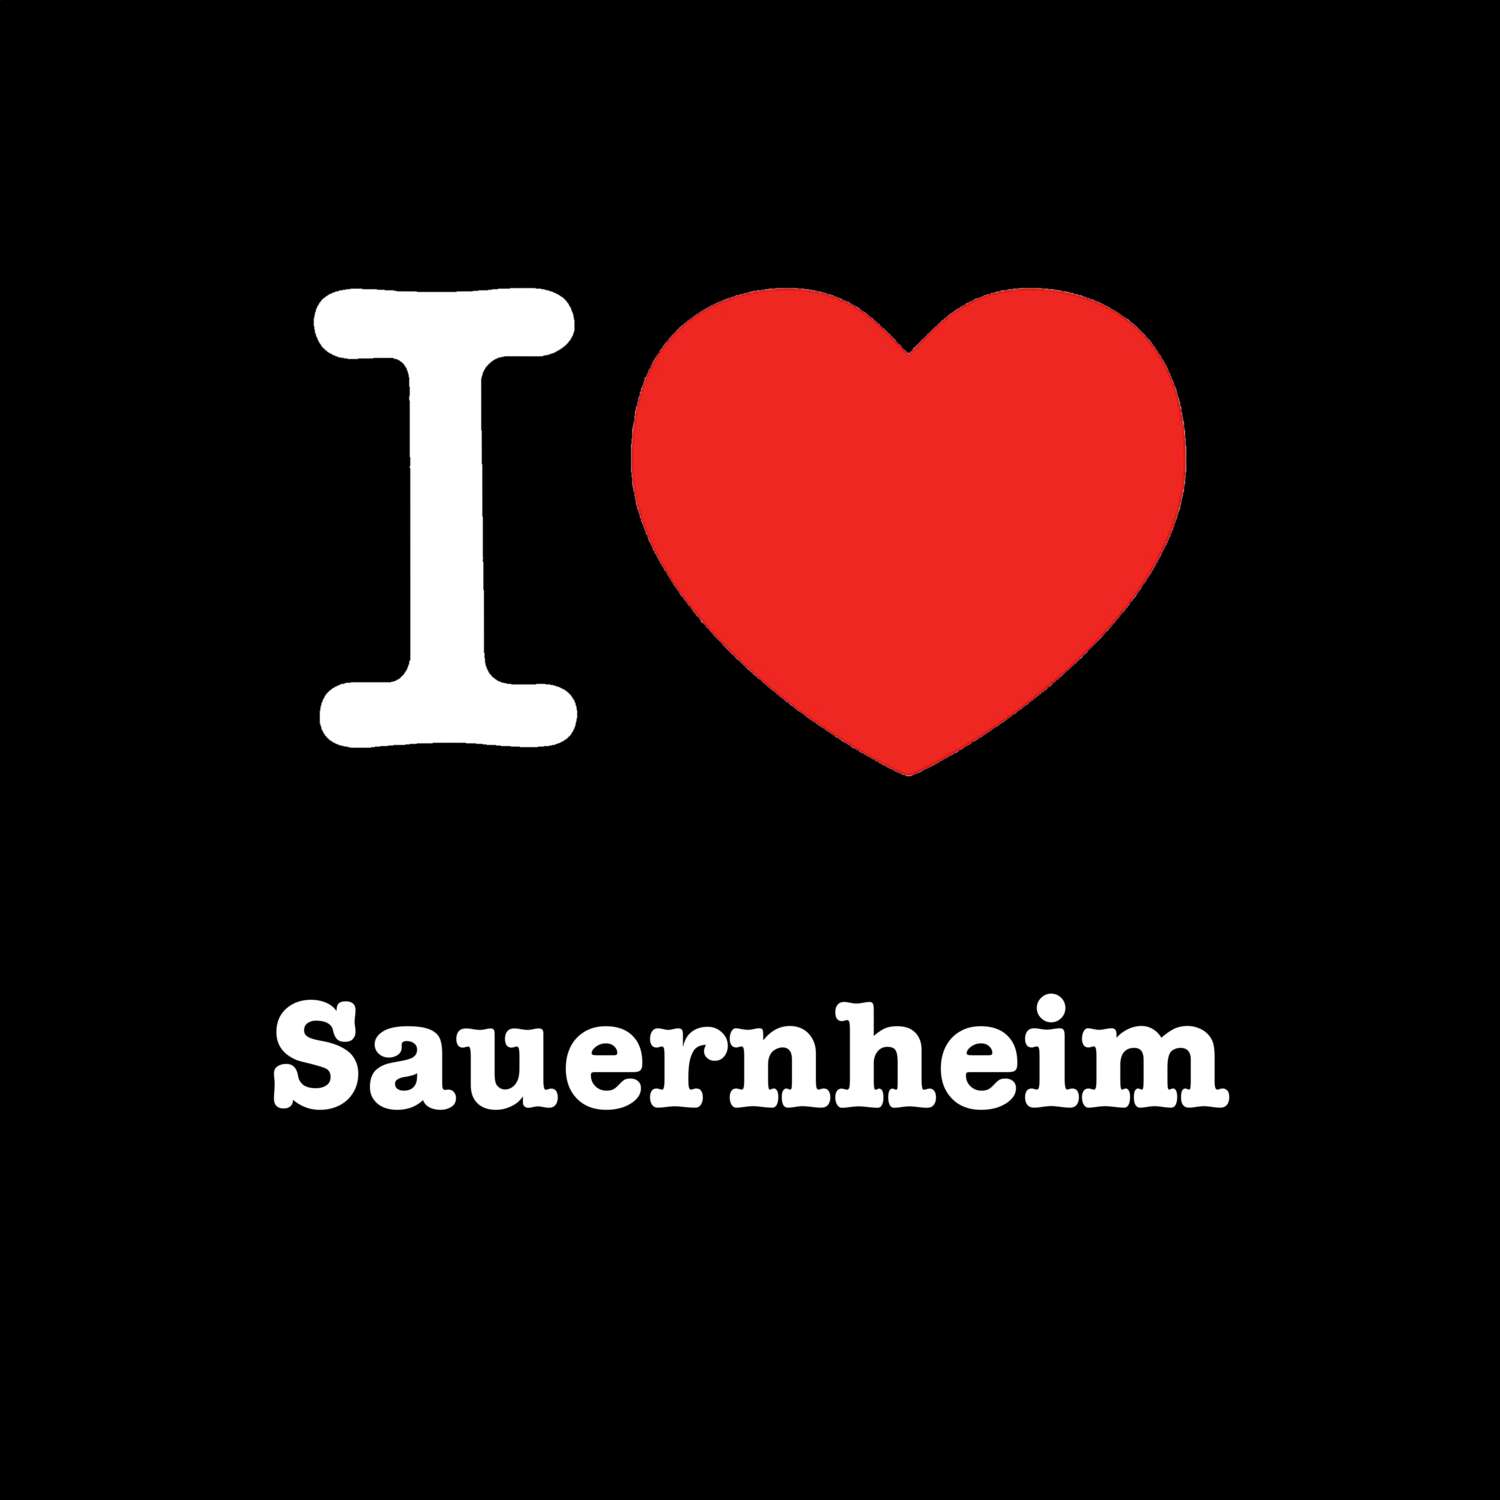 Sauernheim T-Shirt »I love«